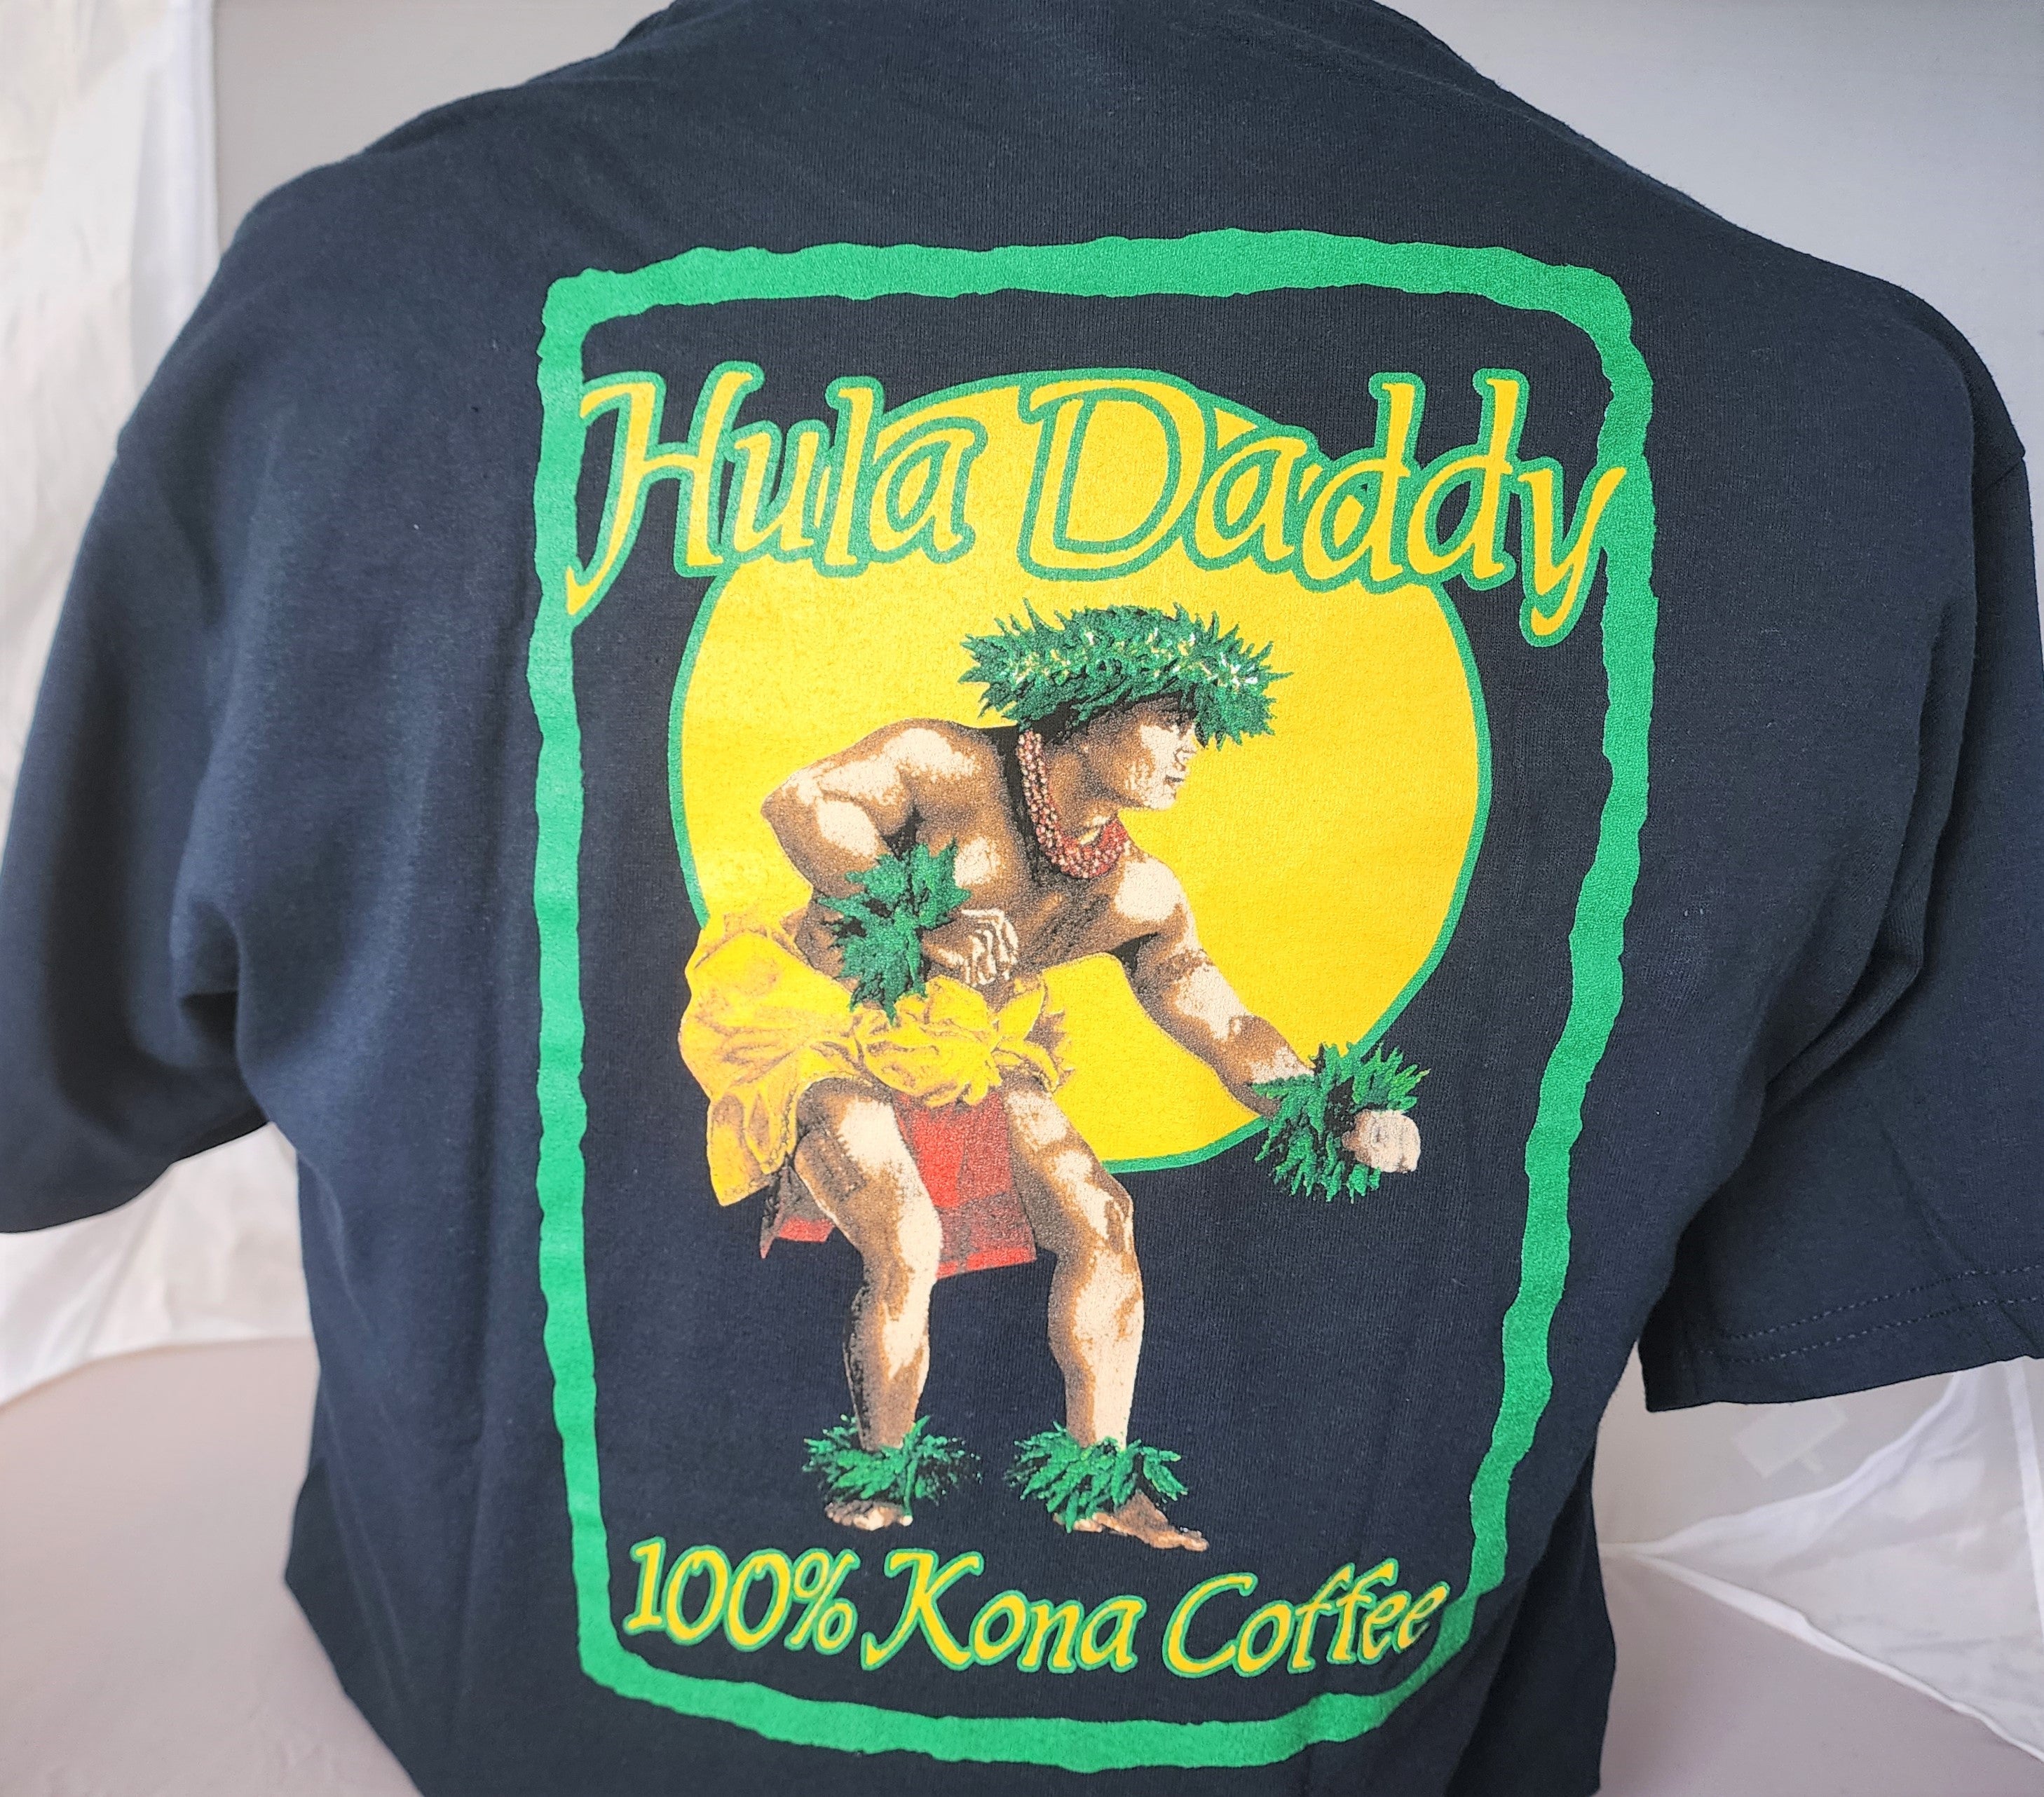 Hula Daddy Logo T-Shirt -- Who's Your Hula Daddy?